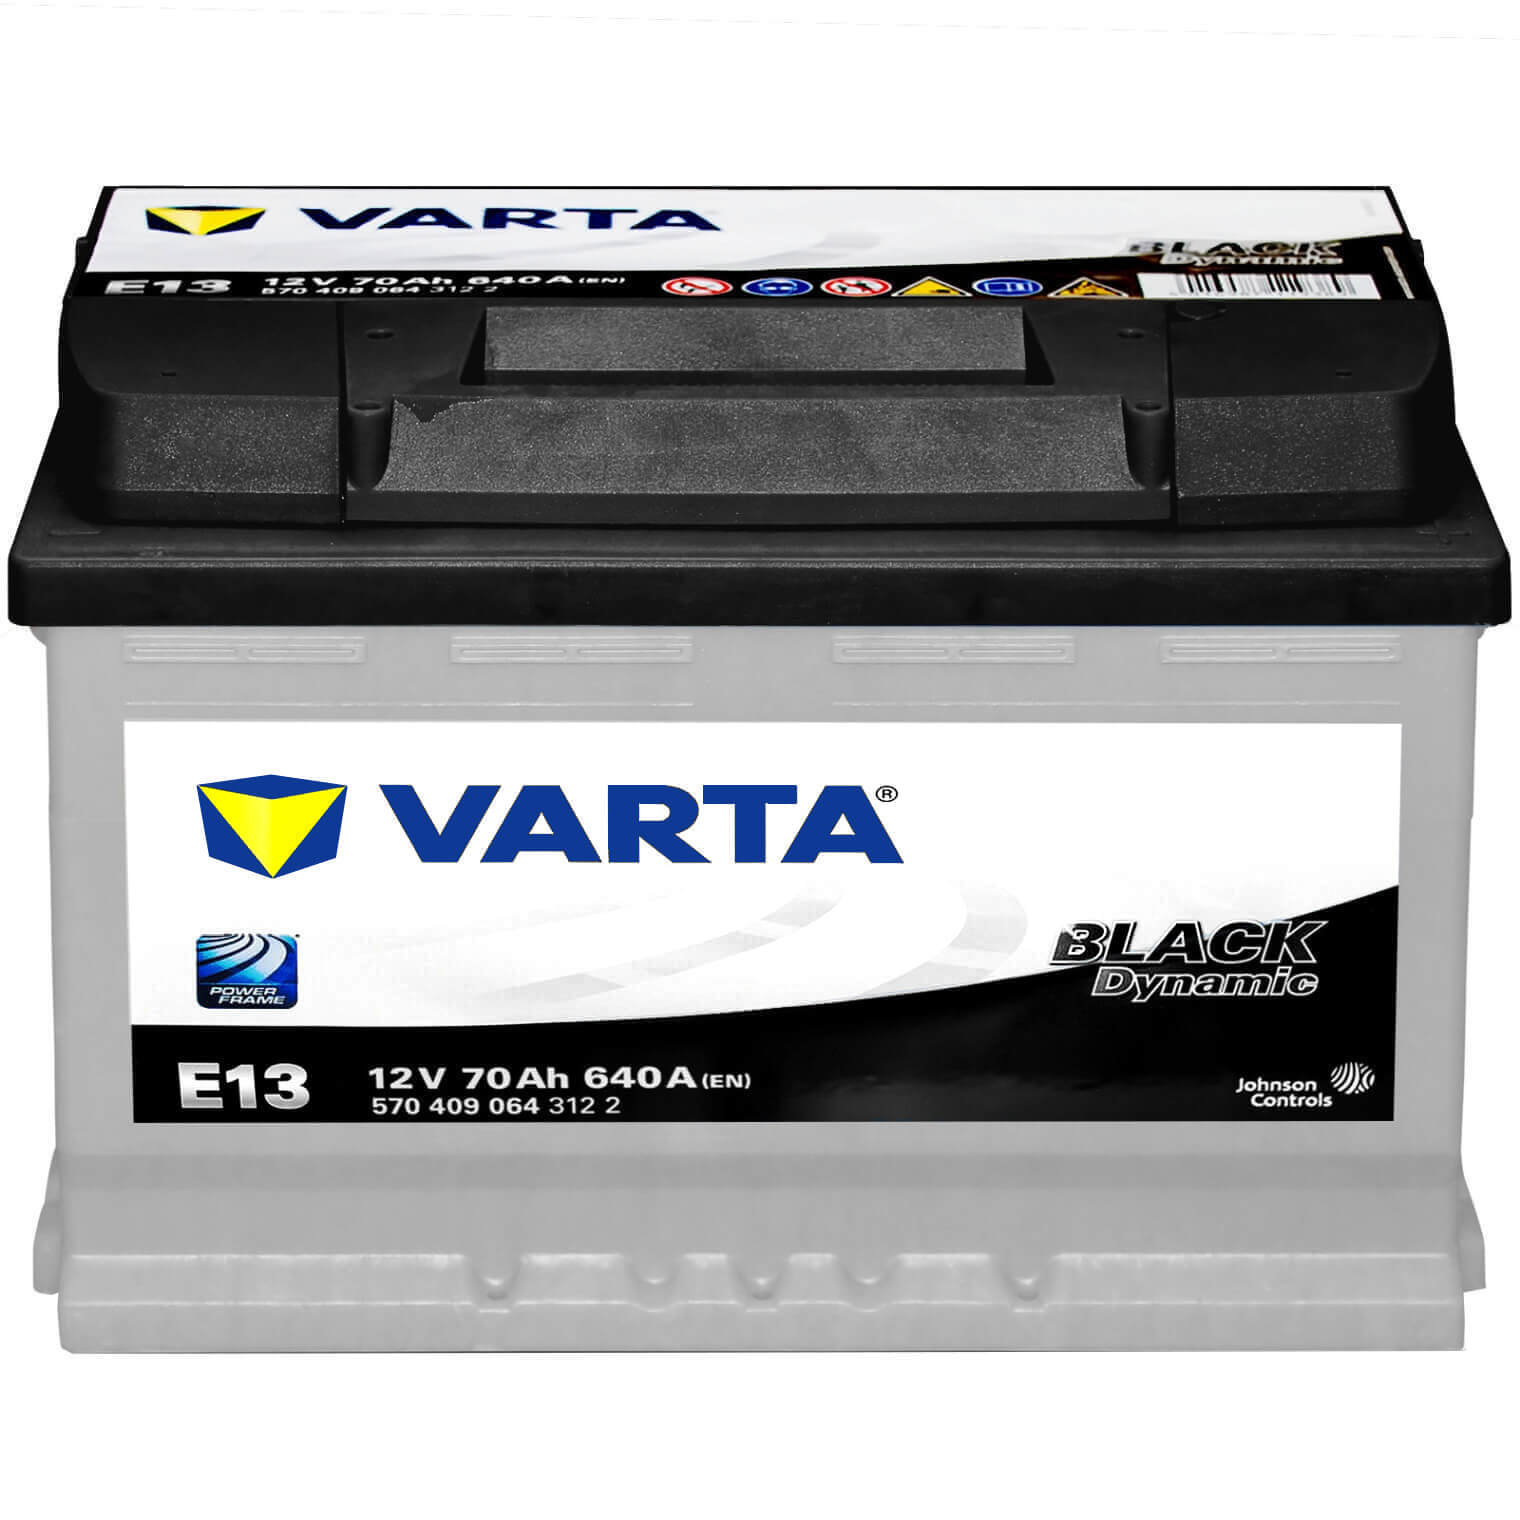 Varta E13 Black Dynamic 12V 70Ah 640A/EN